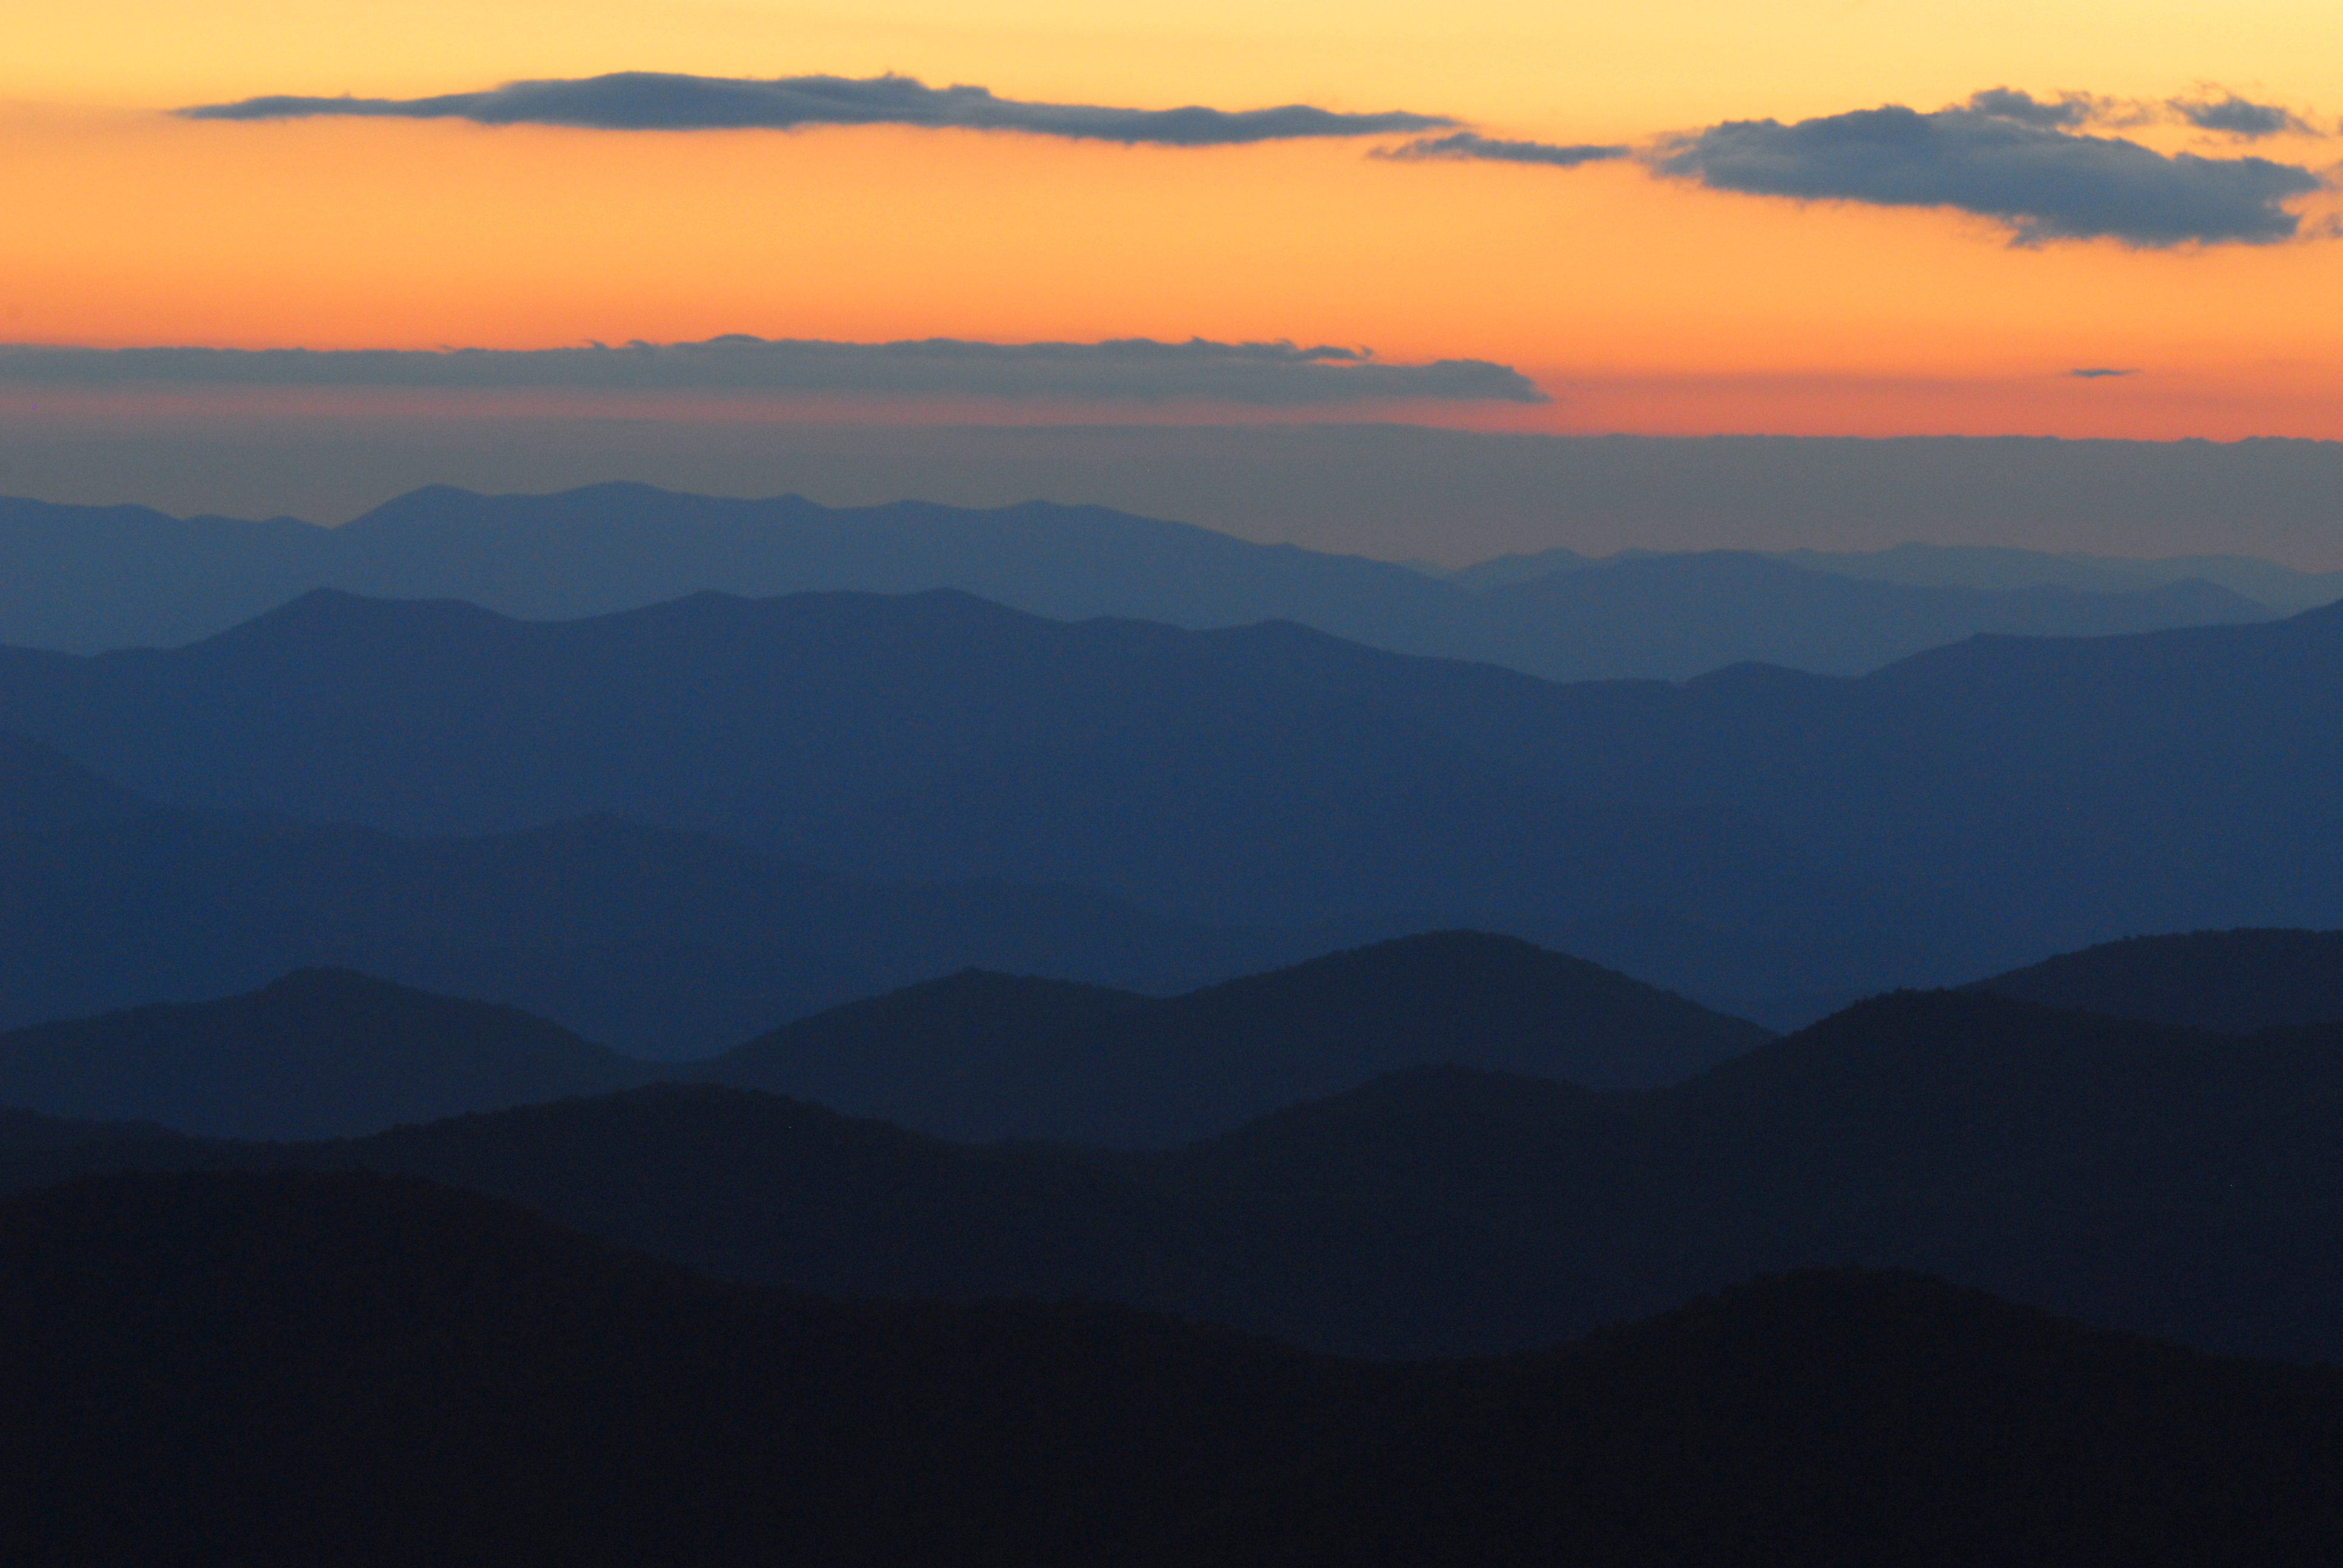 Post-sunset light  -  Cowee Mountain Overlook, Blue Ridge Parkway, North Carolina 